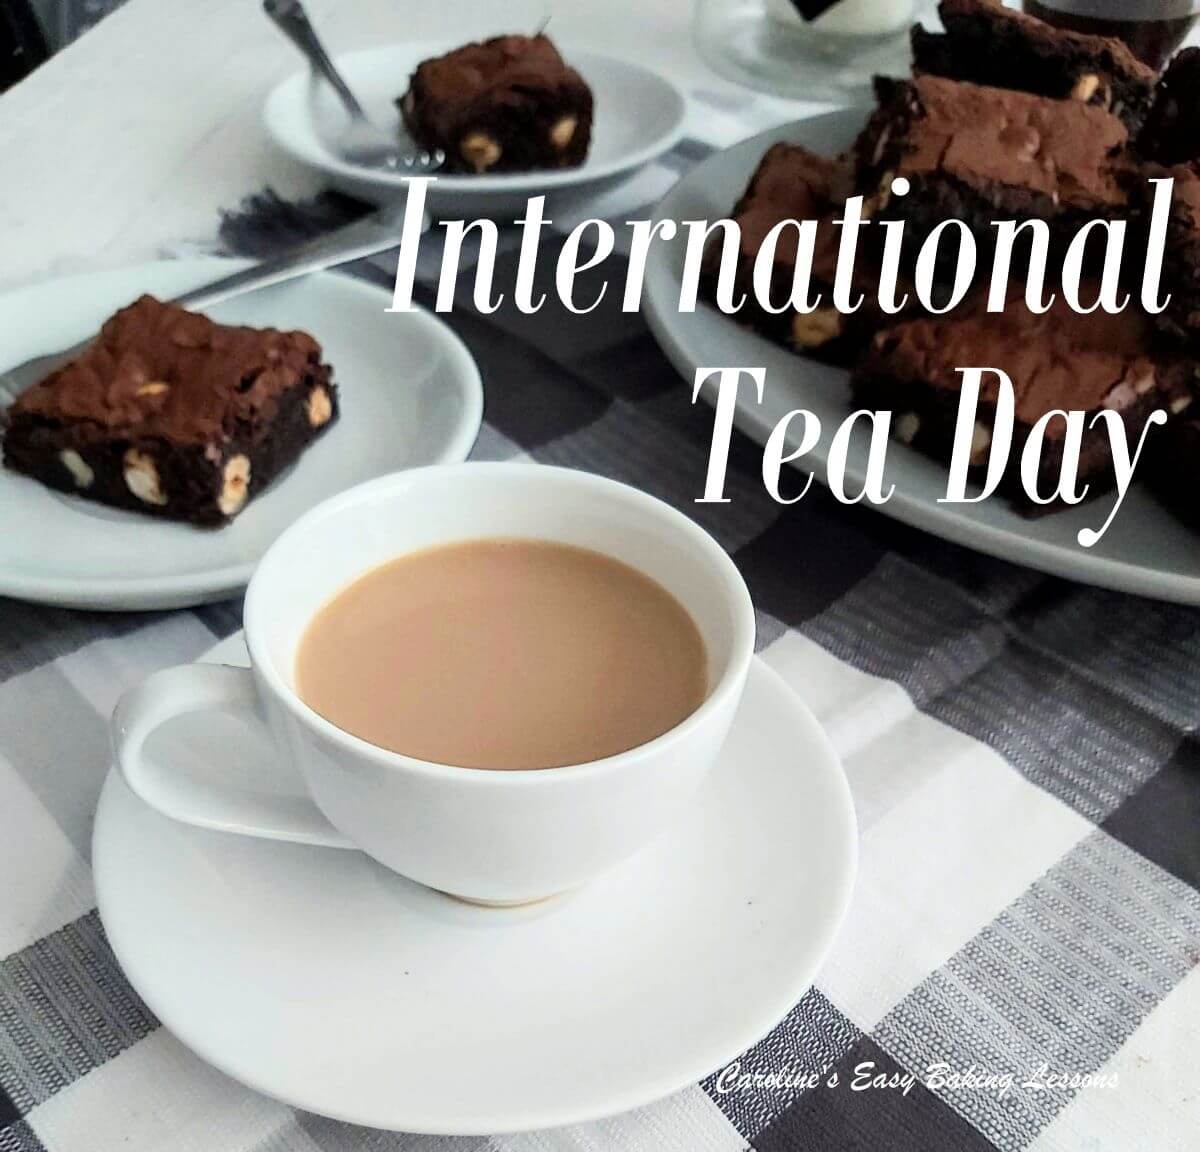 International Tea Day – What To Bake?